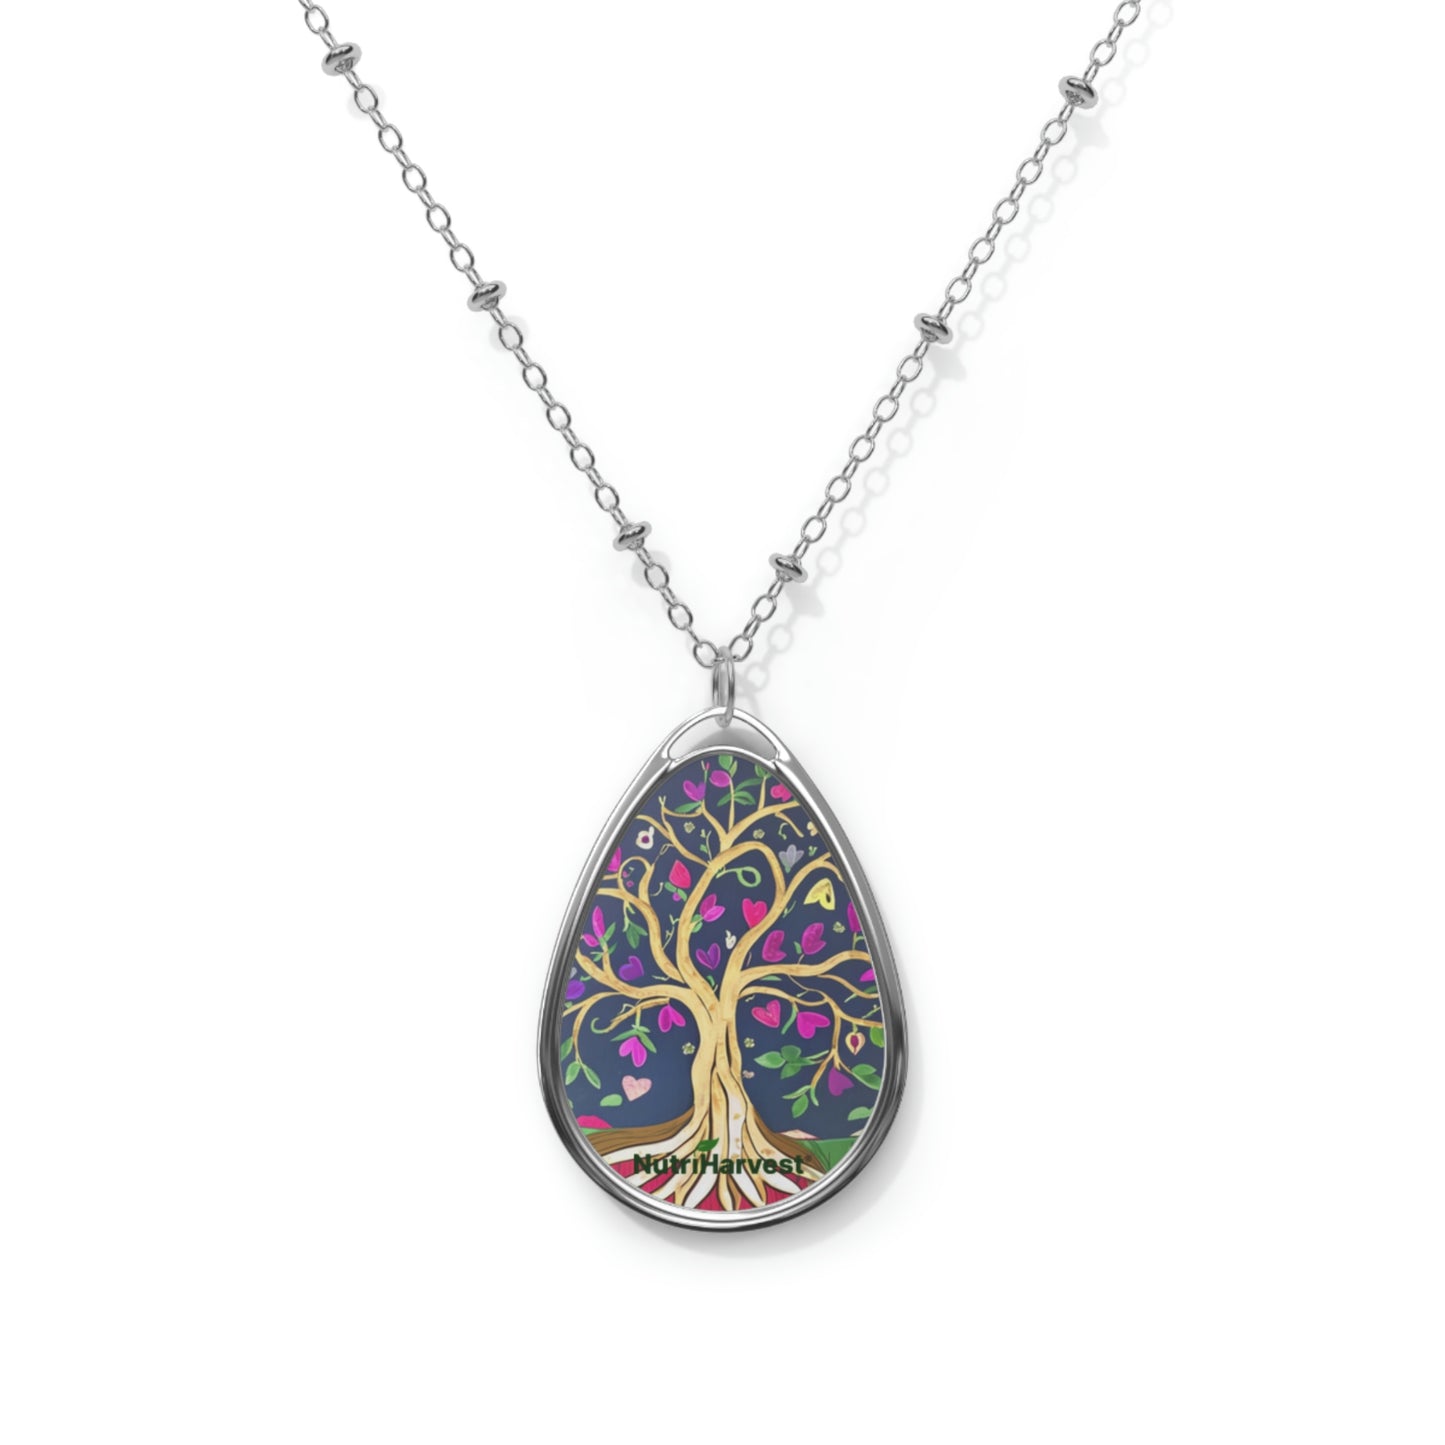 Oval Necklace NutriHarvest® Heart Love tree